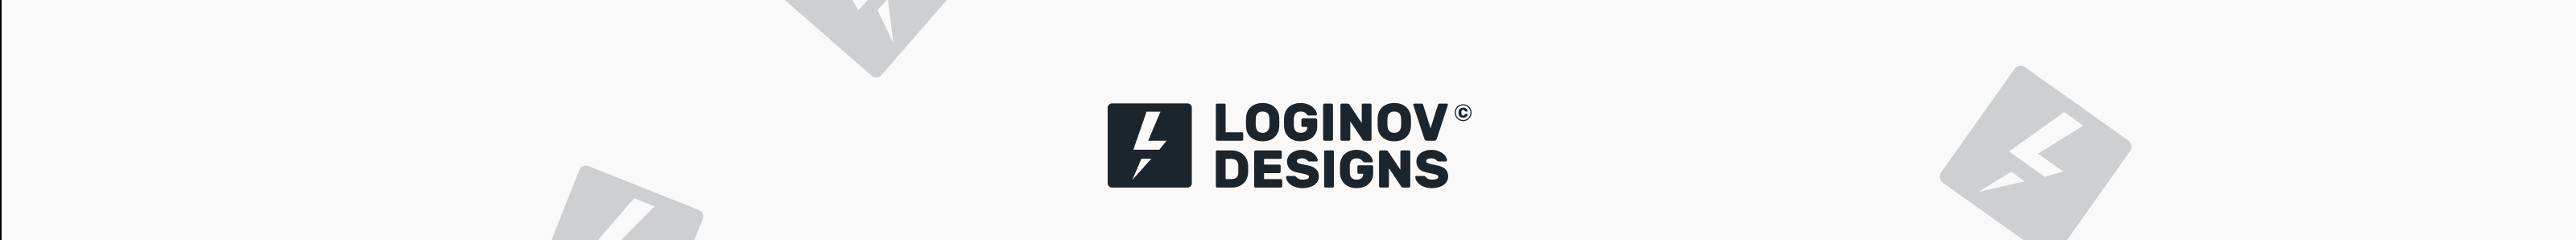 Loginov Designss profilbanner